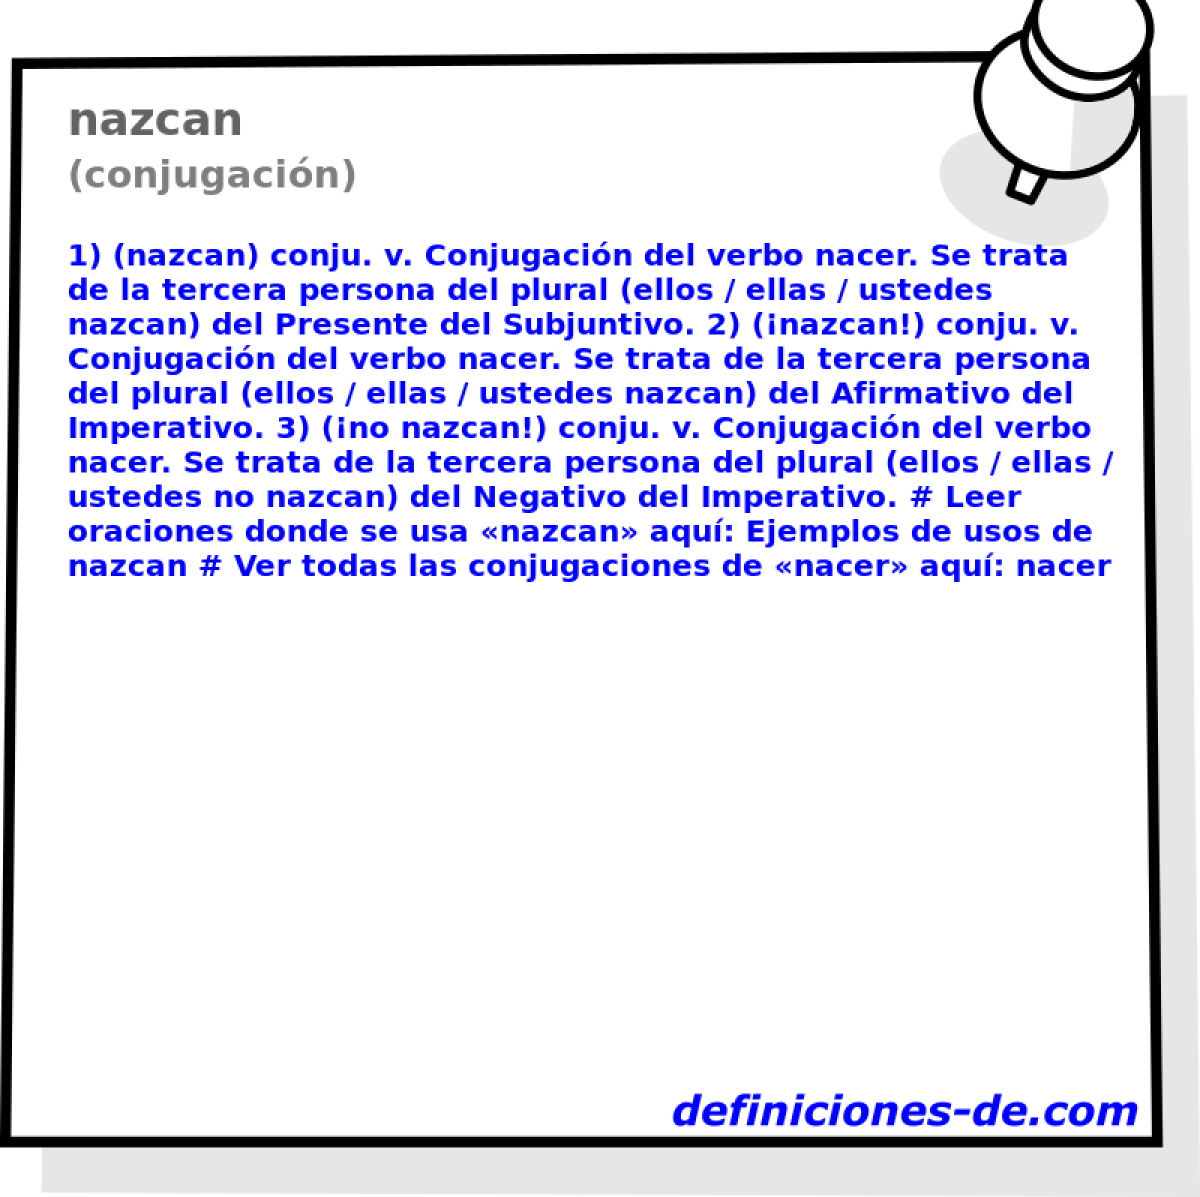 nazcan (conjugacin)